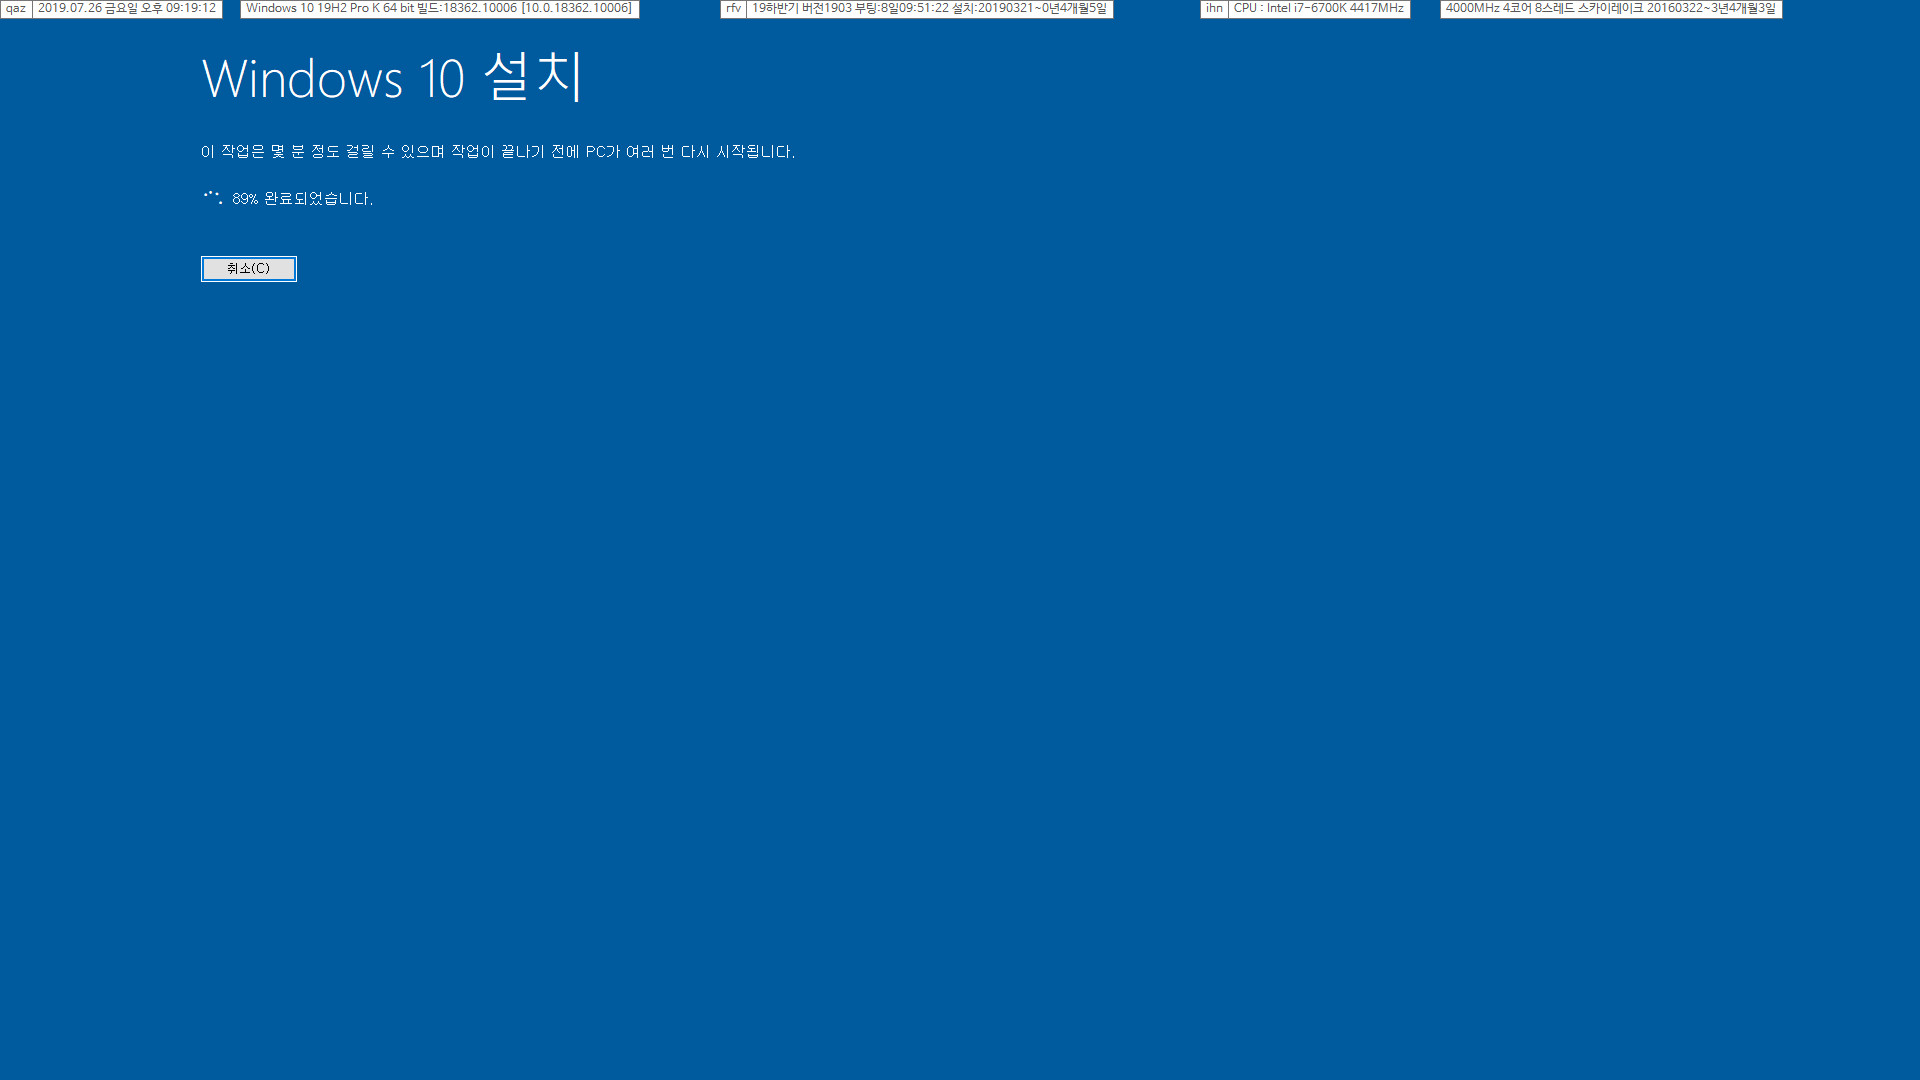 Windows 10 19H2 Pro 버전 1903, 빌드 18362.10006 - winver 창의 이상한 폰트 때문에 윈도 재설치를 해보기로 했다. 포맷 설치는 아니고 iso의 setup.exe을 이용한 업그레이드 방식이다 - 89퍼센트에서 갑자기 다시 시작으로 가더라 2019-07-26_211912.jpg